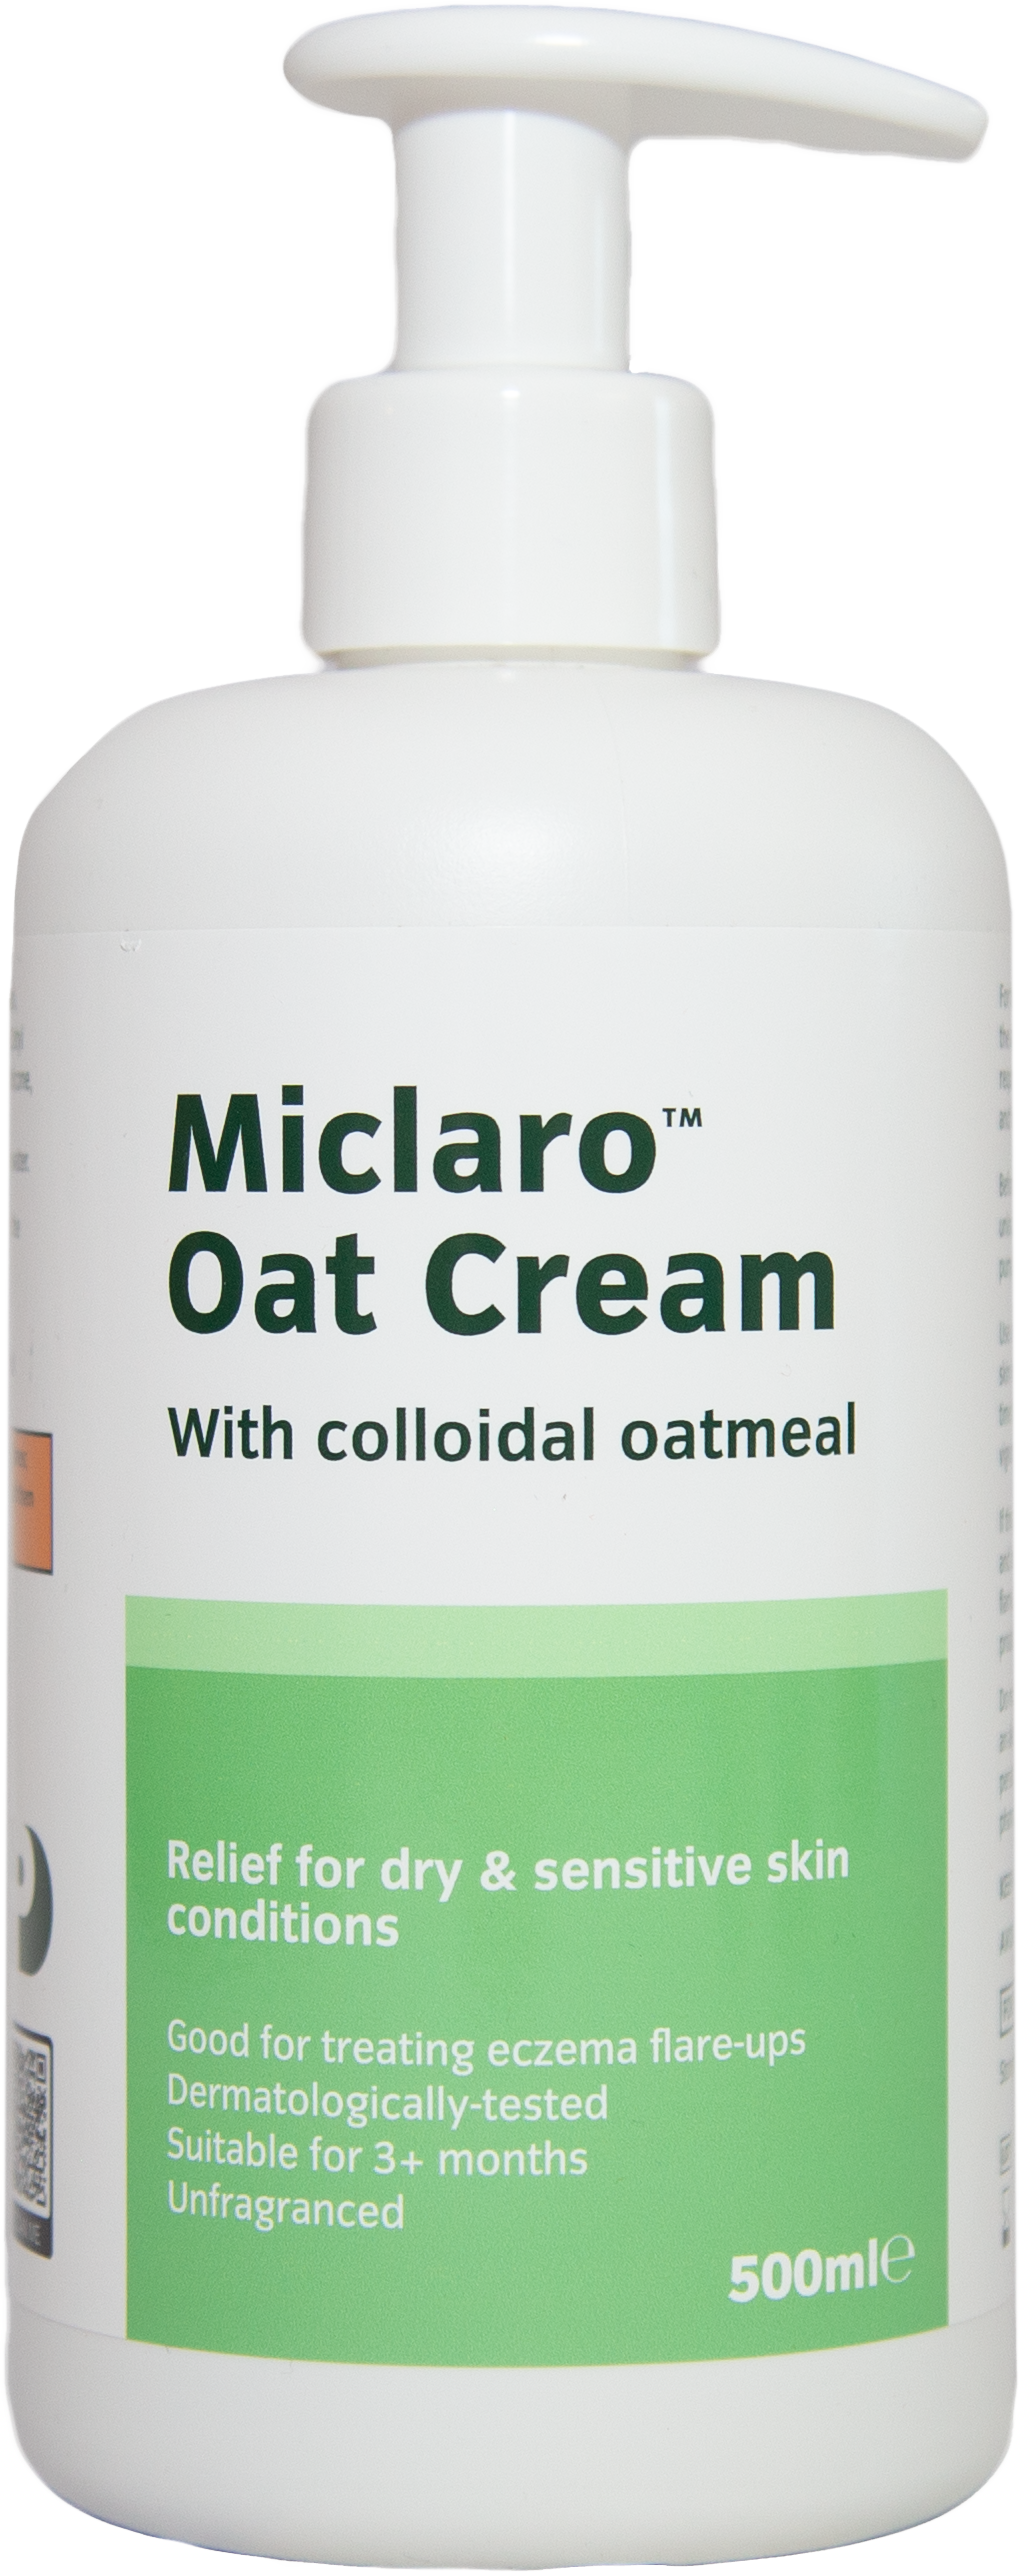 Miclaro Oat Cream